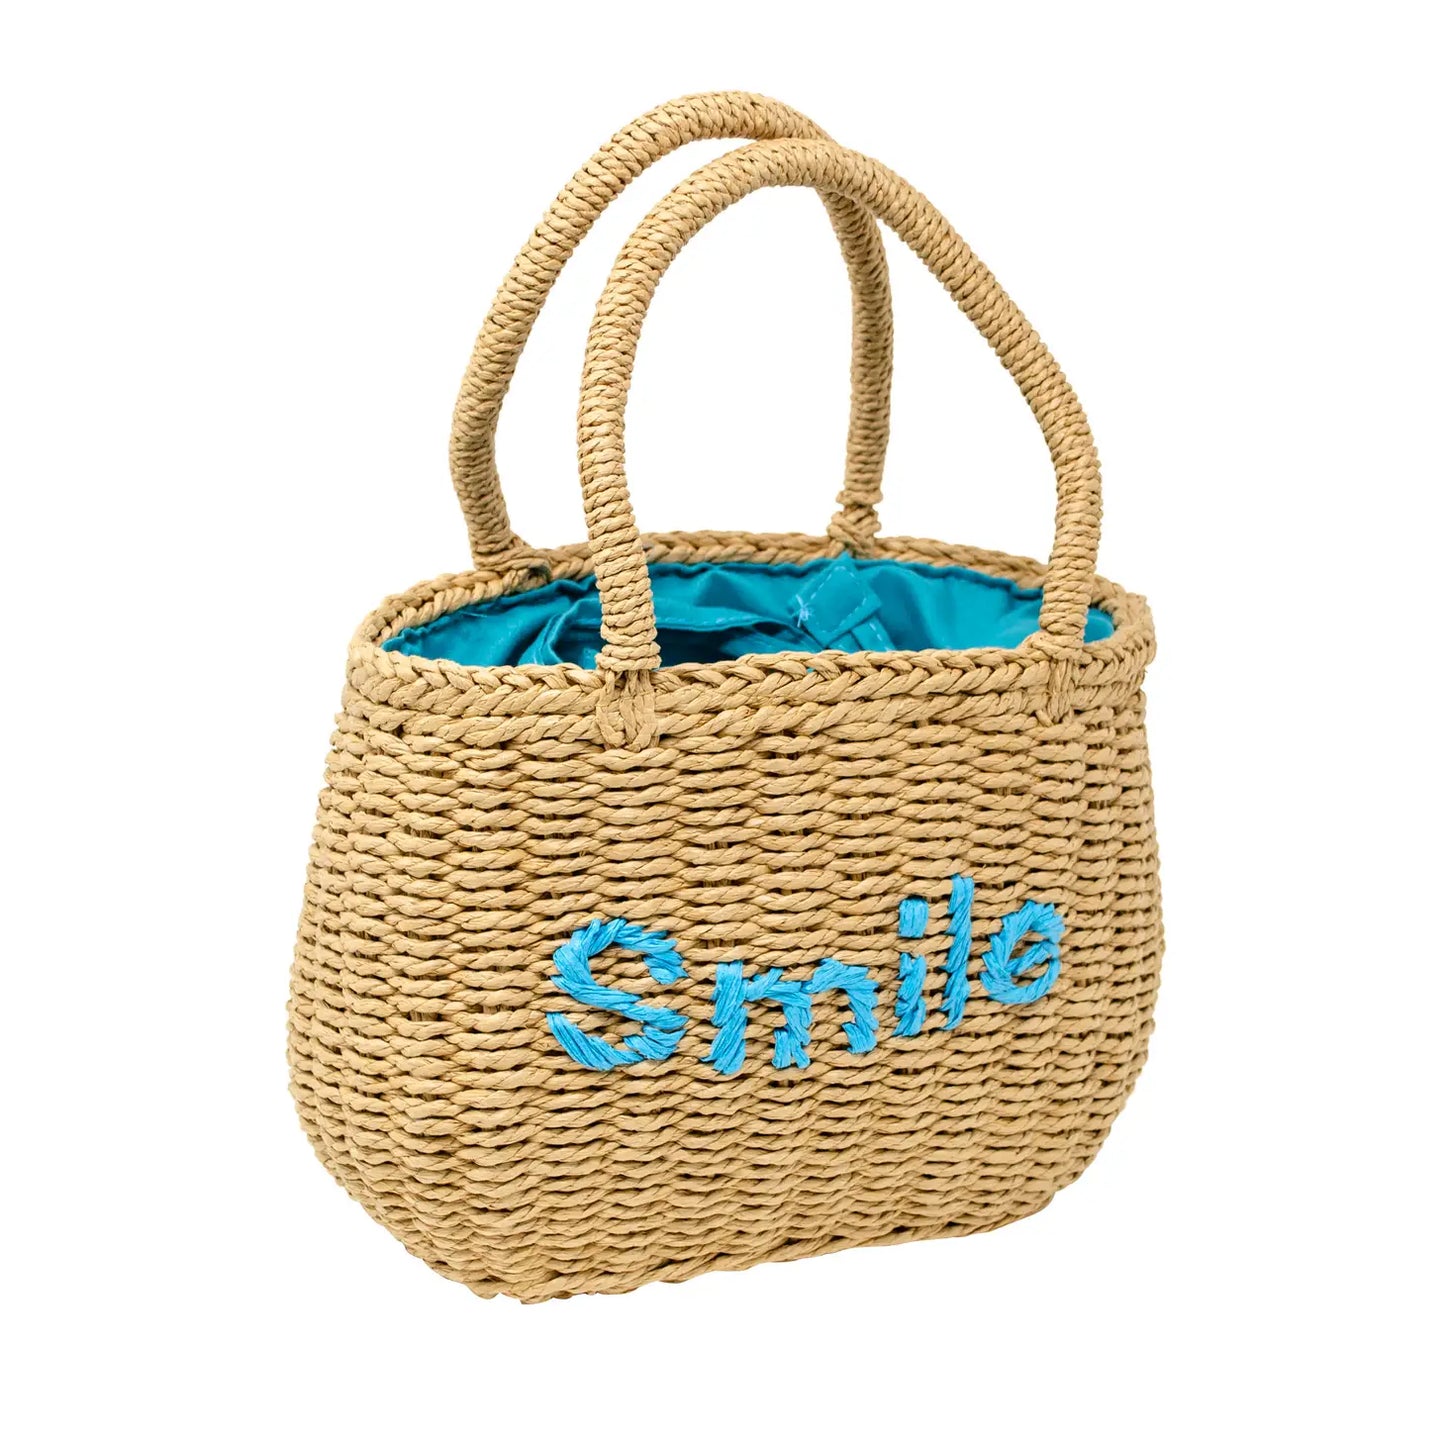 Wicker Basket "Smile" Bag - Turquoise